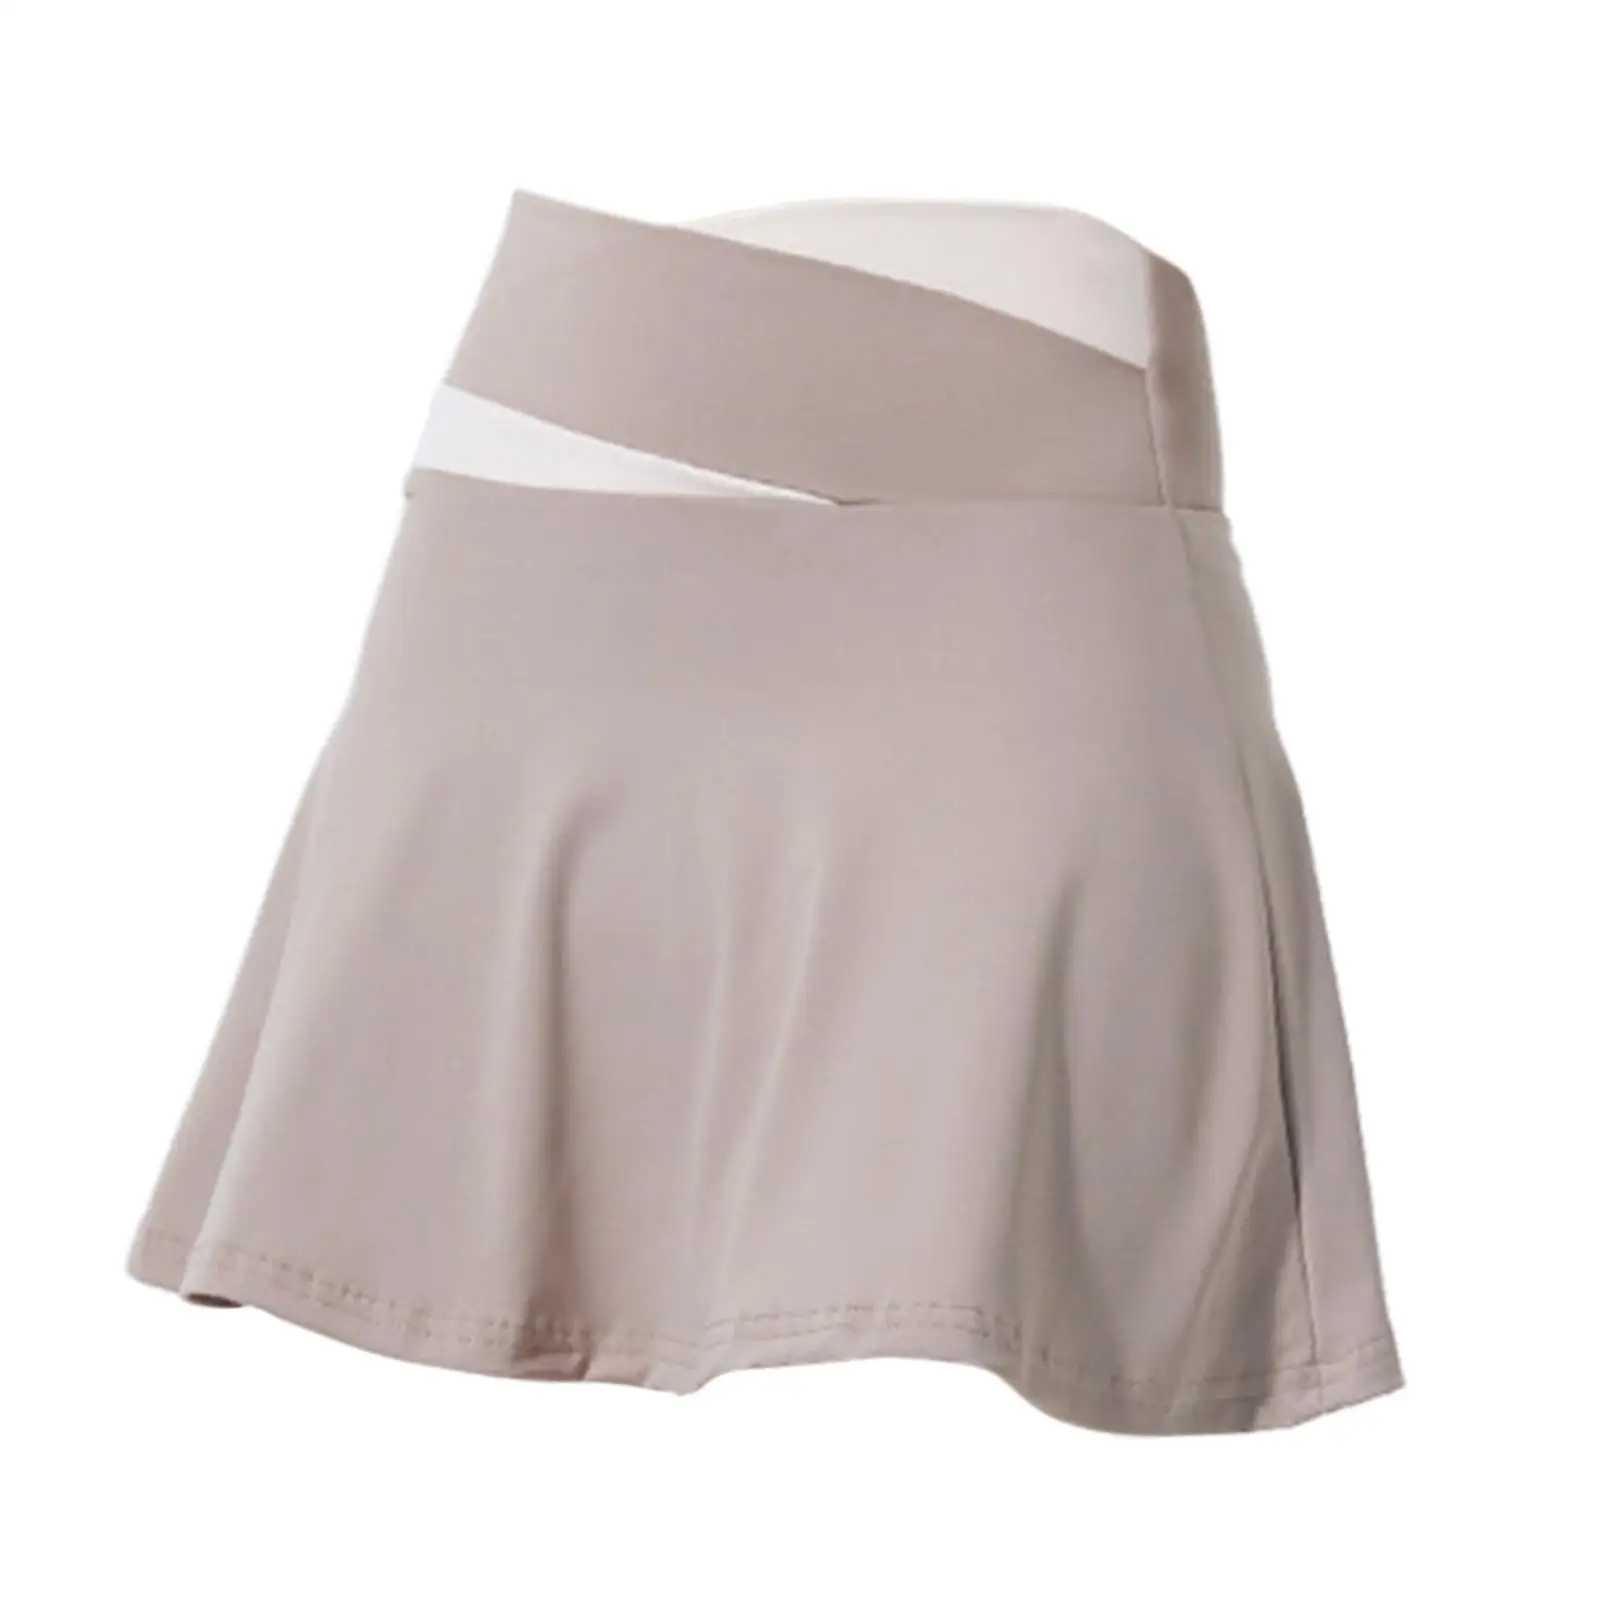 Tennis Skirts Short Skirts Mini Skirt Clothing Outfits Casual Athletic Womens Skirt for Golf Running Summer Beach Yoga Exercise